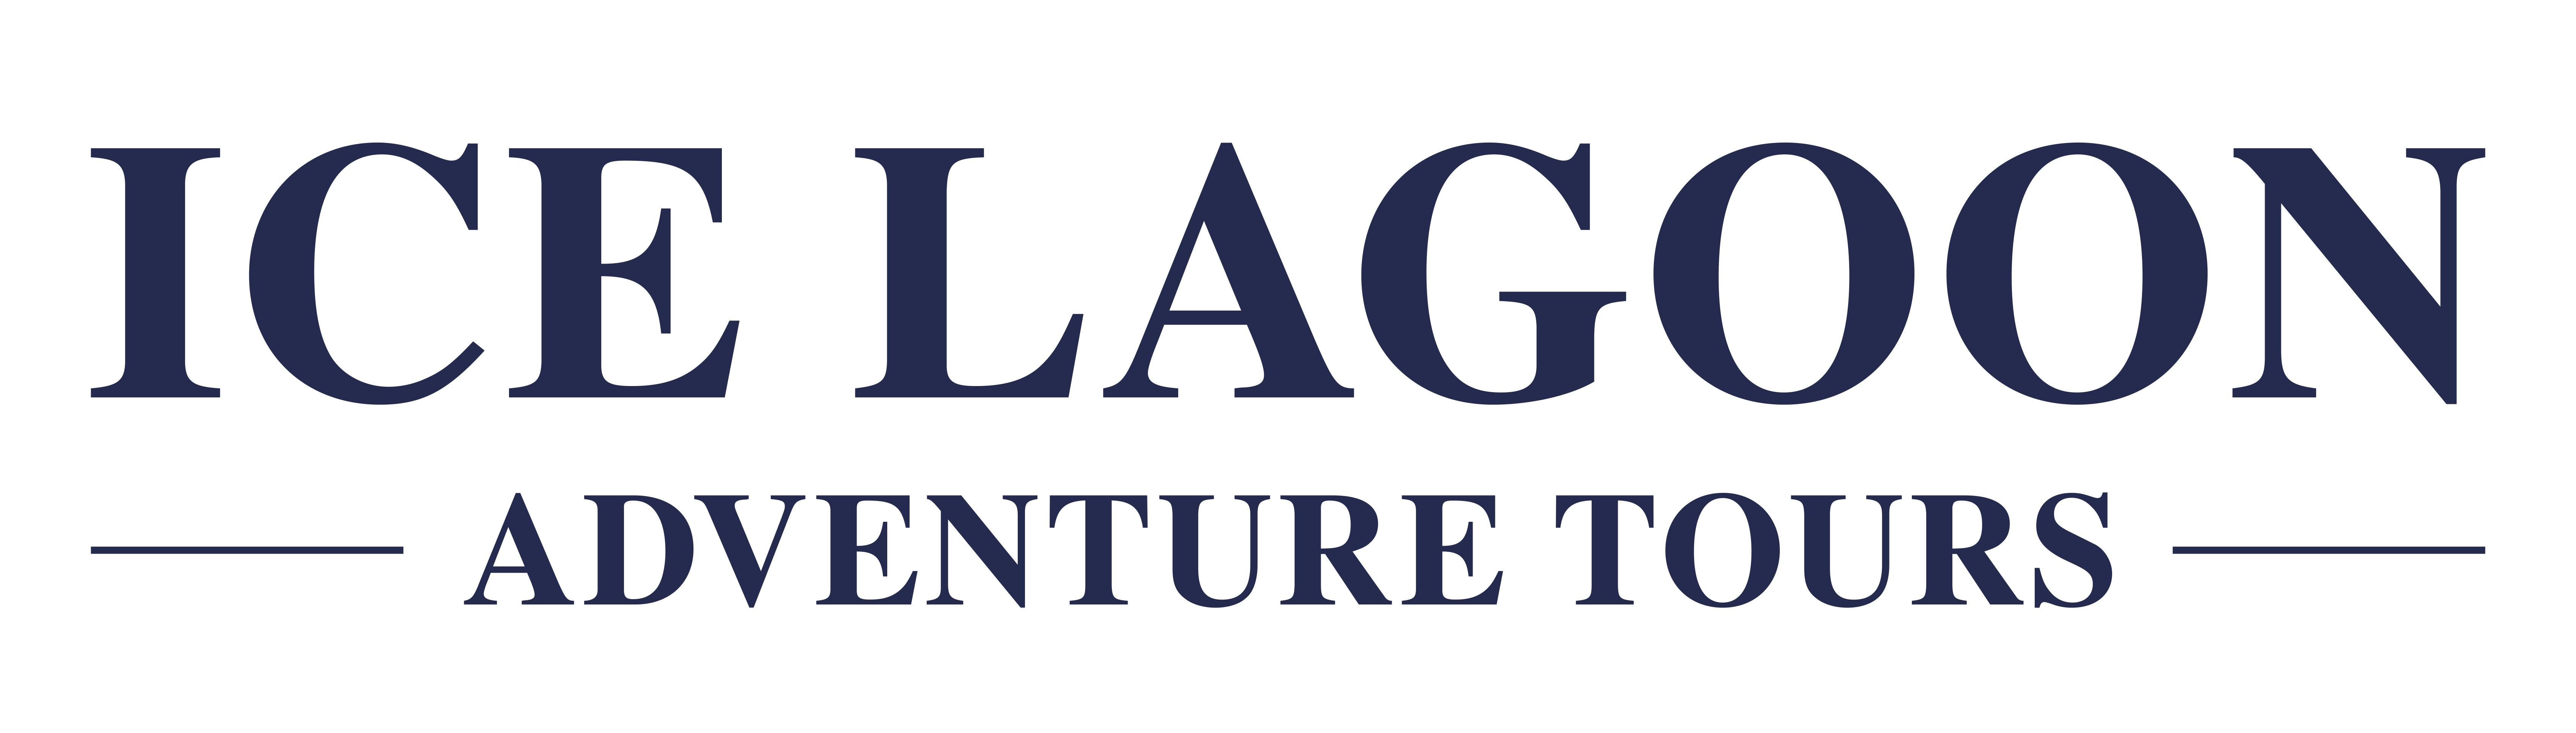 Ice Lagoon logo.jpg